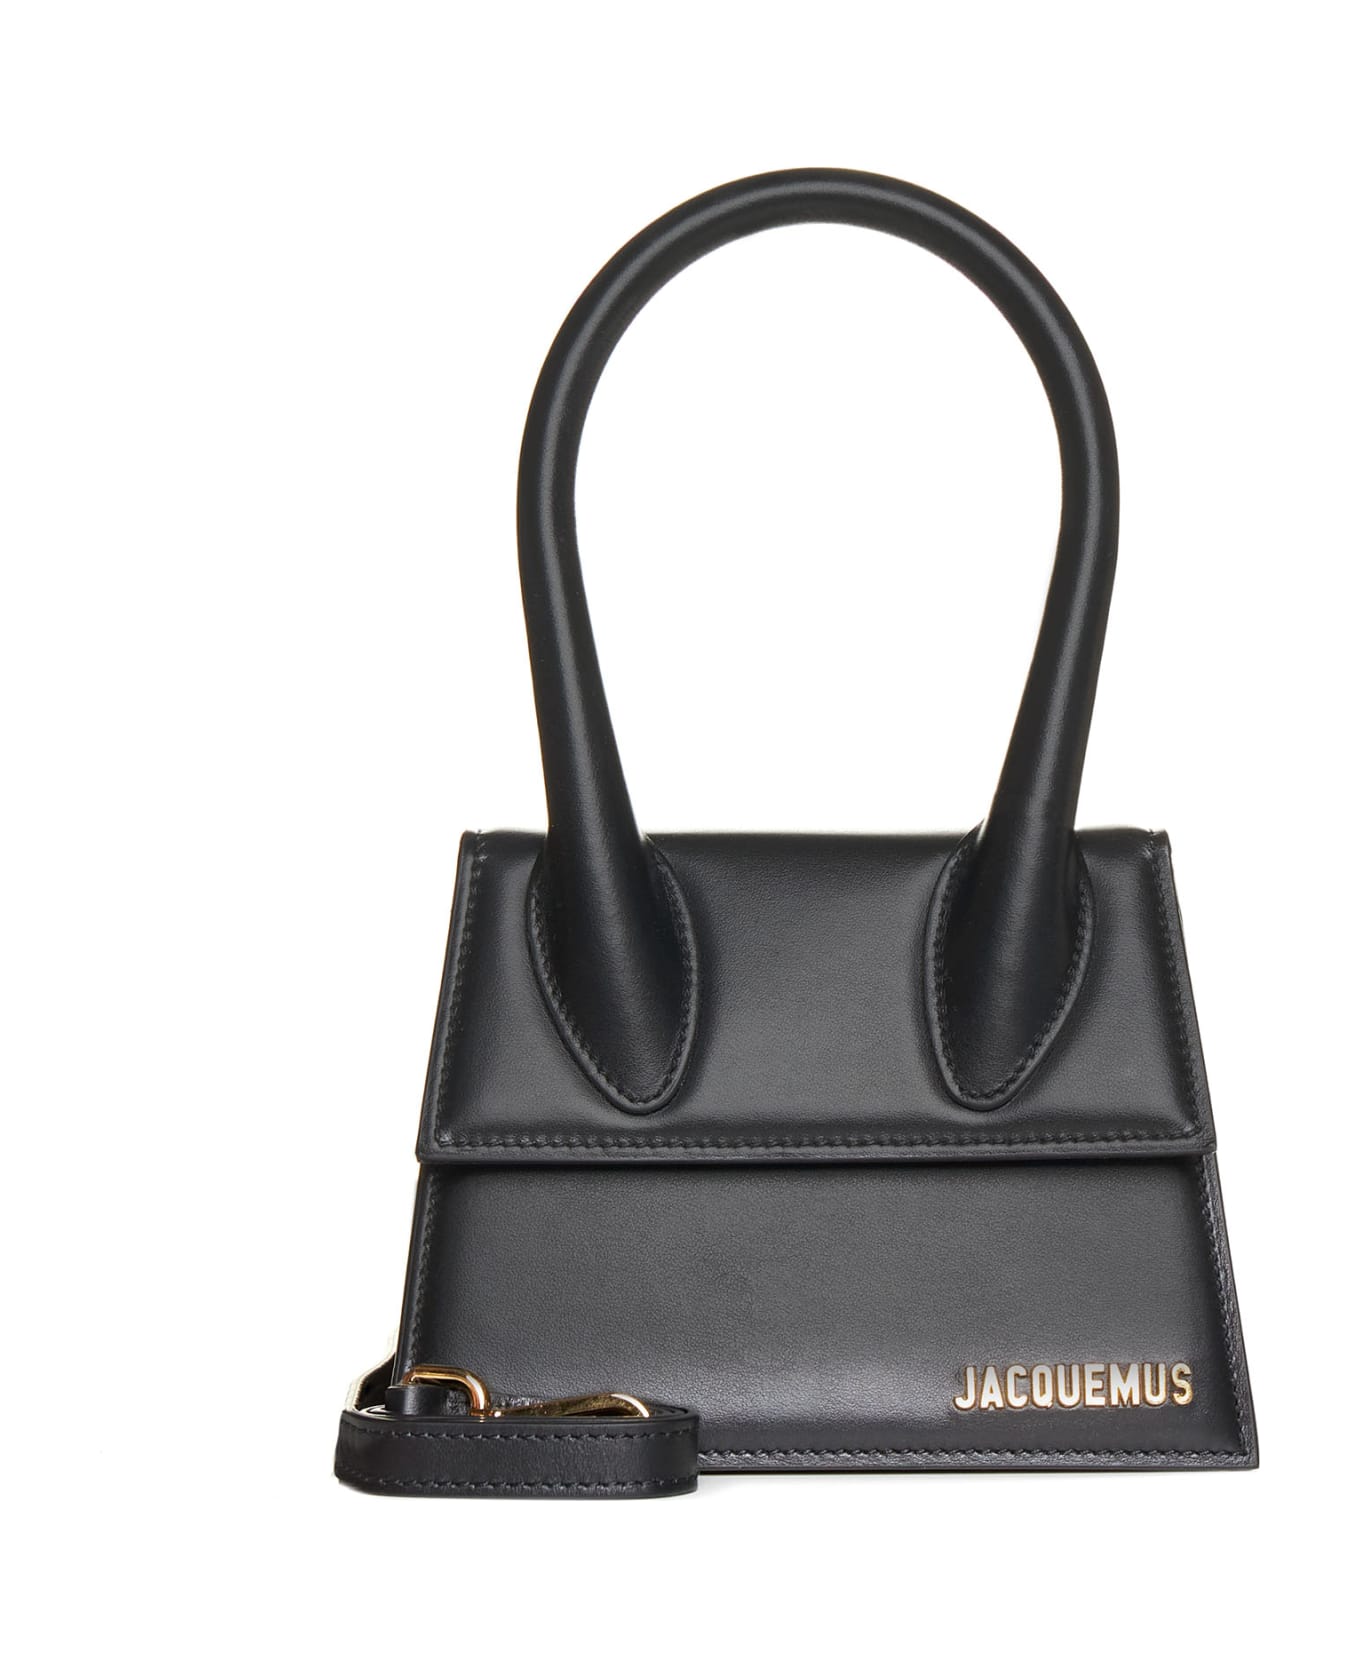 Jacquemus Le Chiquito Handbag - Black トートバッグ